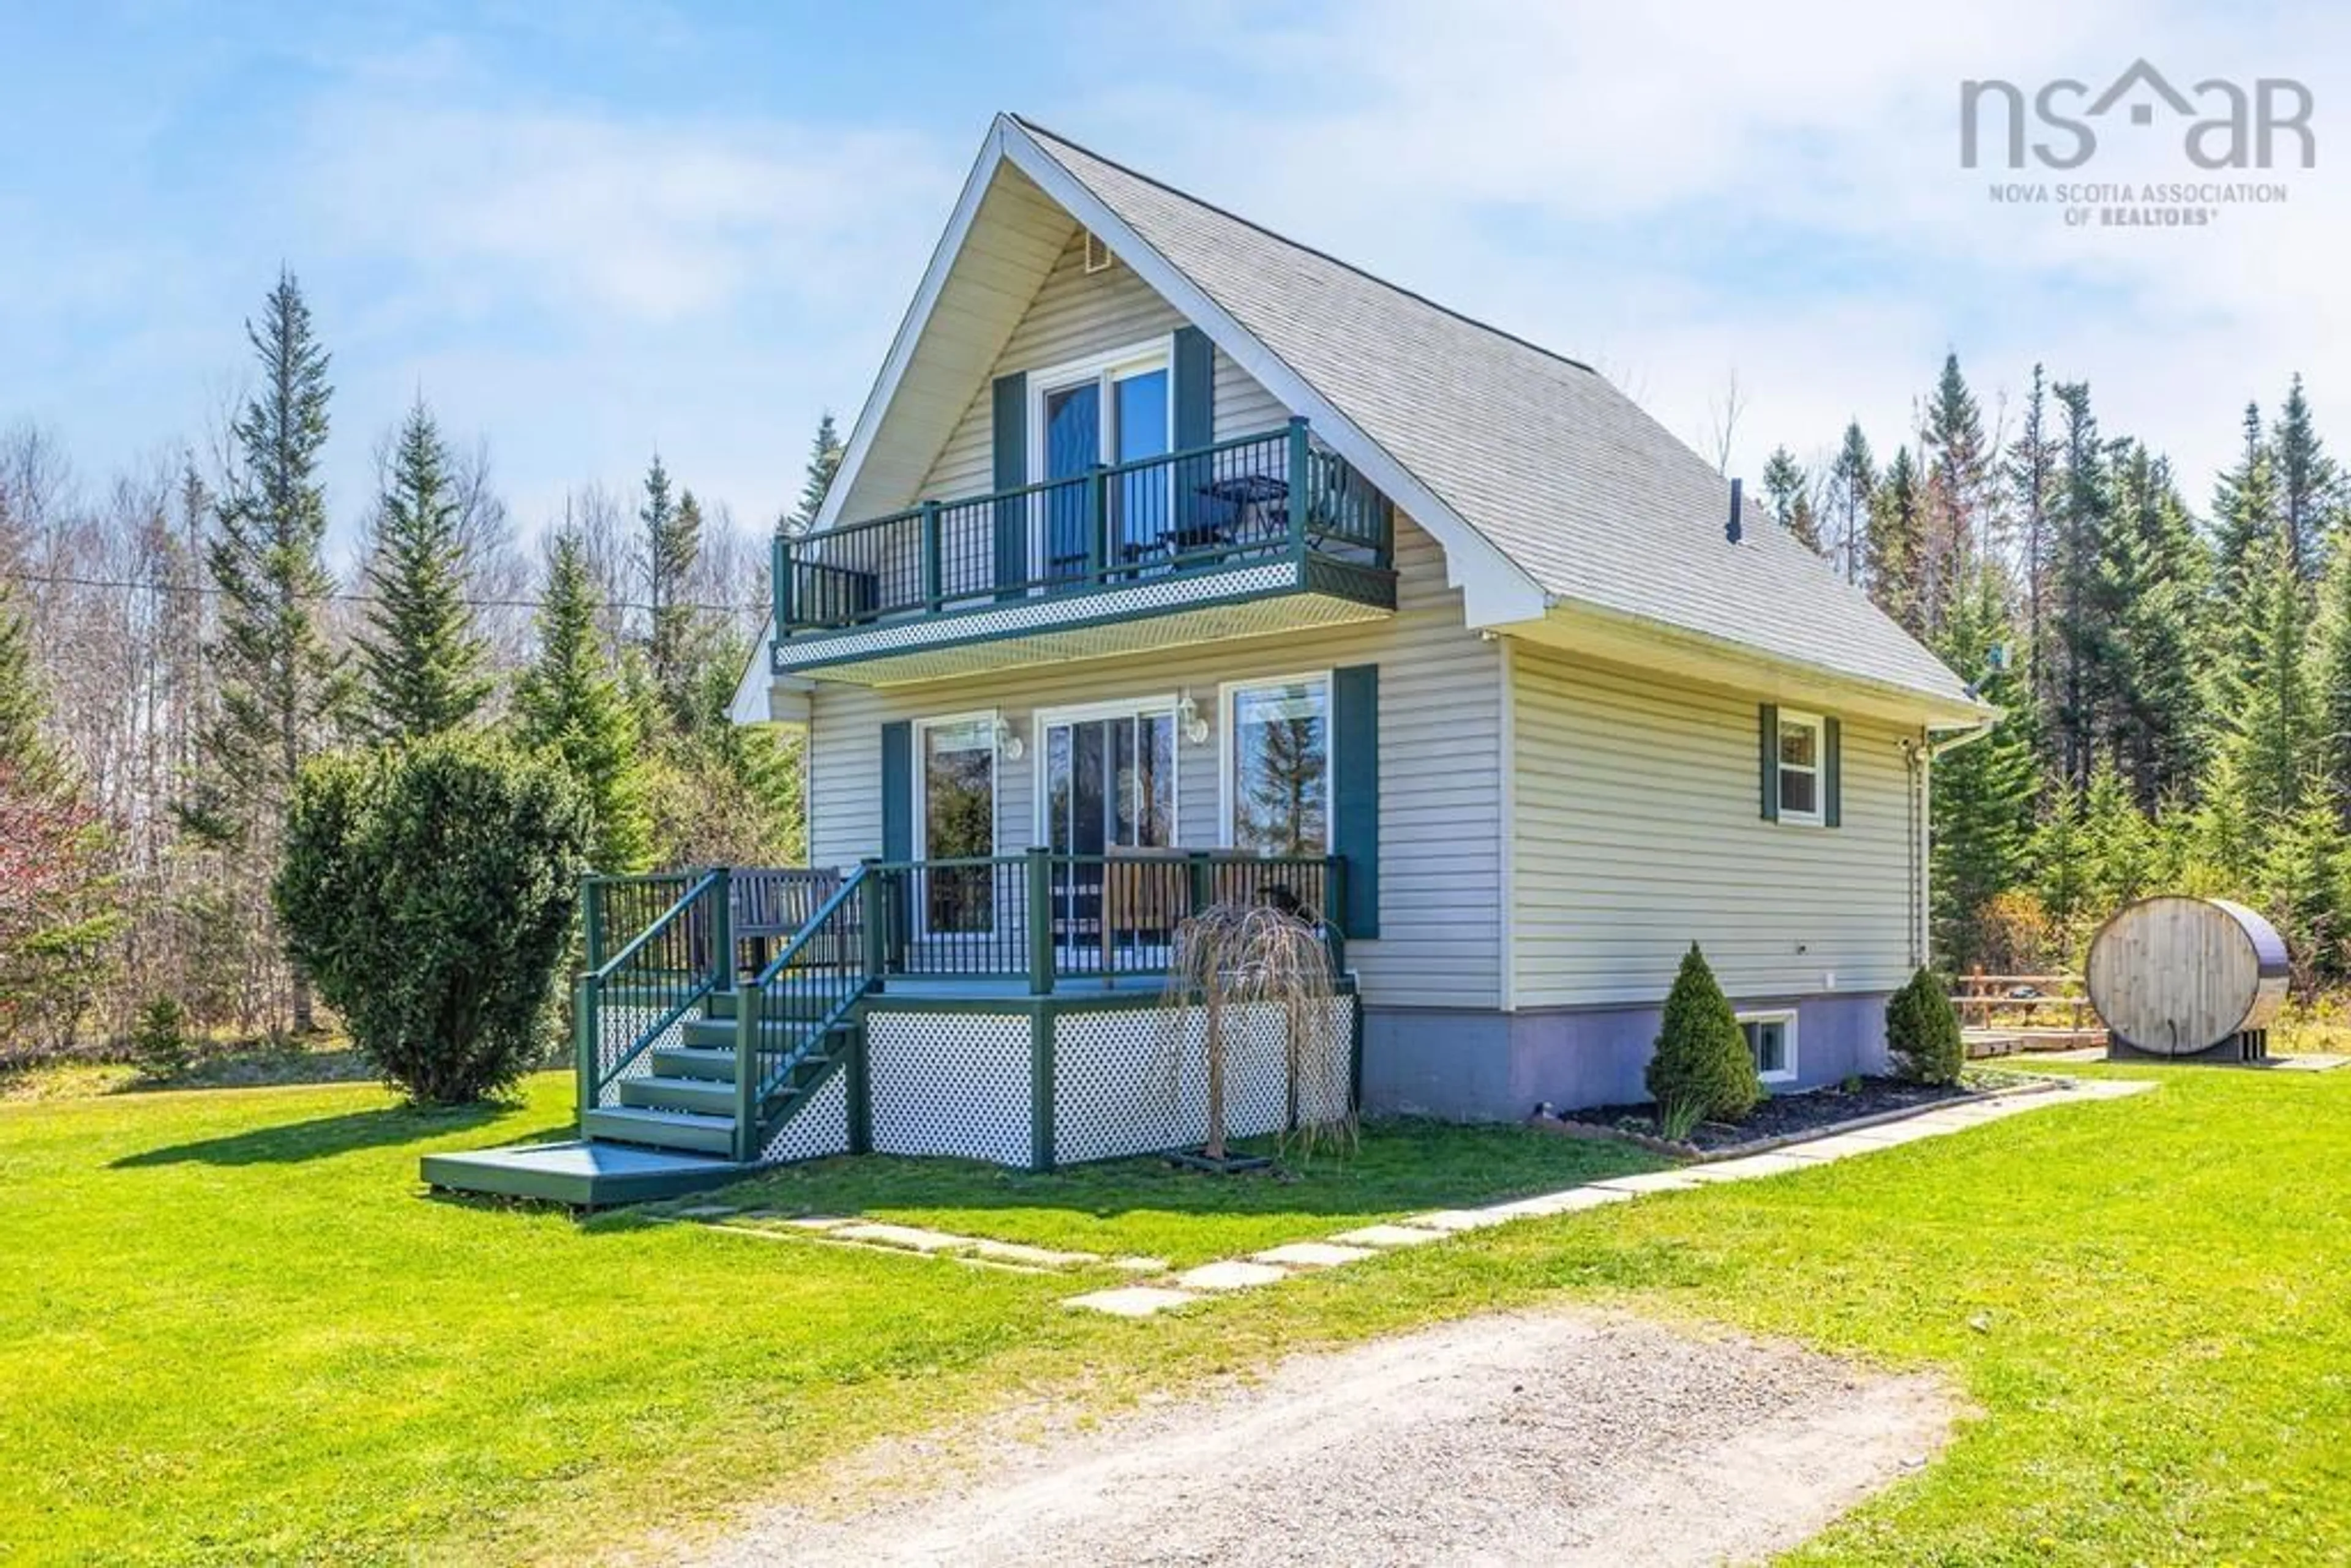 Cottage for 4037 Cloverdale Rd, East Stewiacke Nova Scotia B0N 2J0